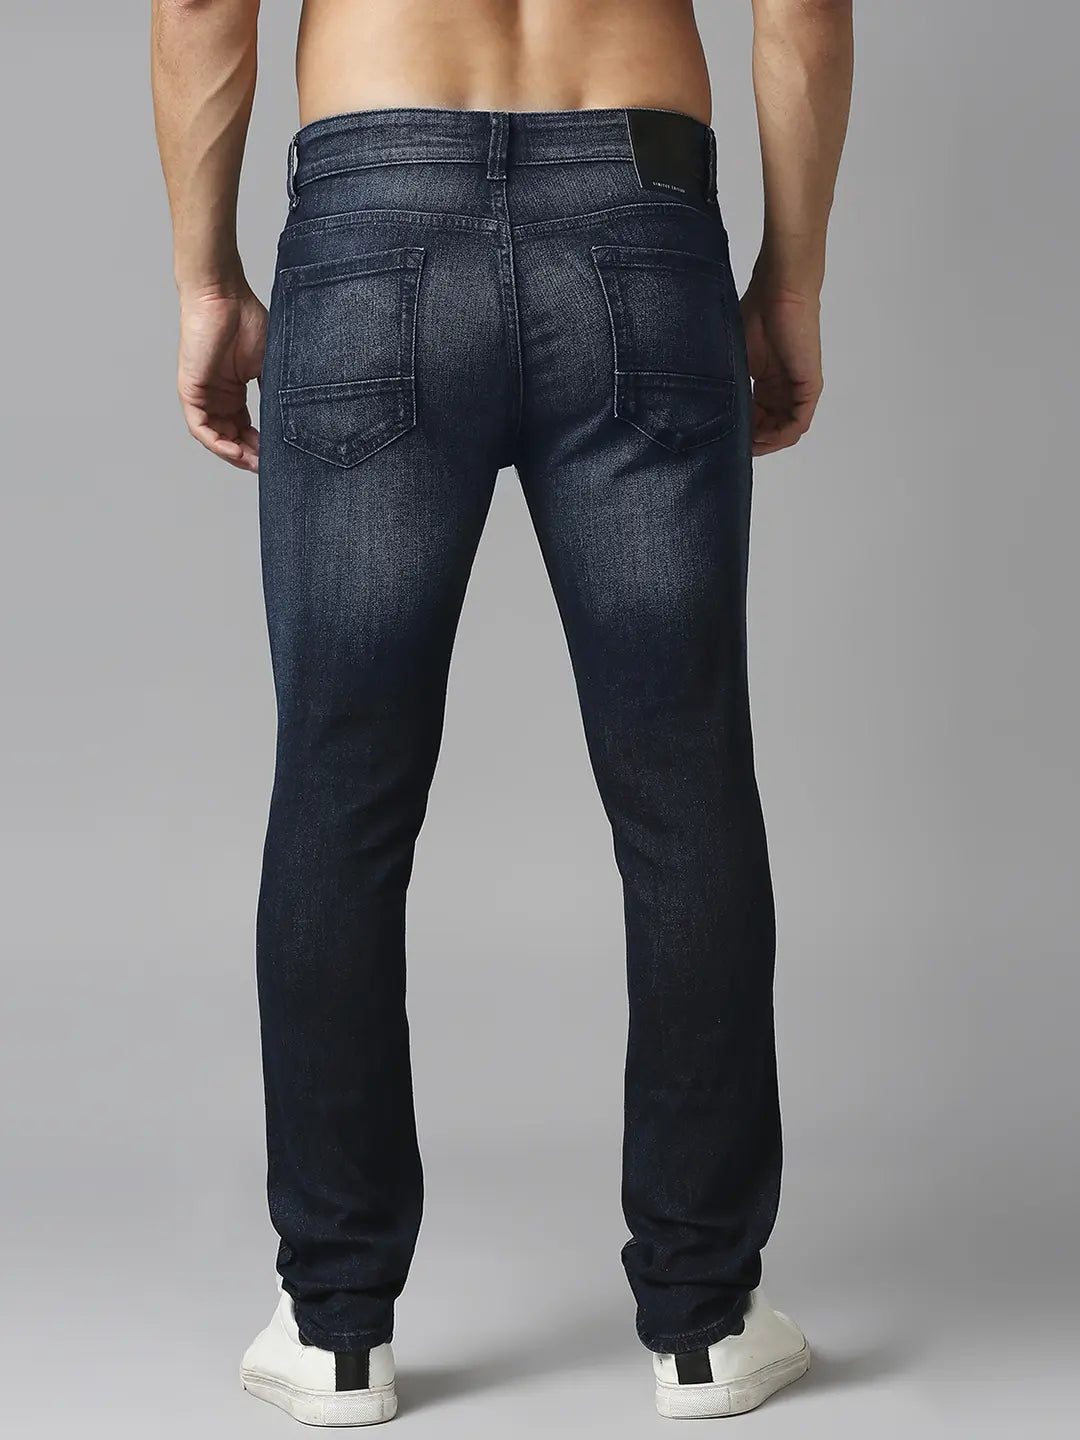 Spykar Limited Edition Dark Blue Slim Fit Narrow Length Low rise Clean Look Premium Stretchable Denim Jeans For Men (Skinny)